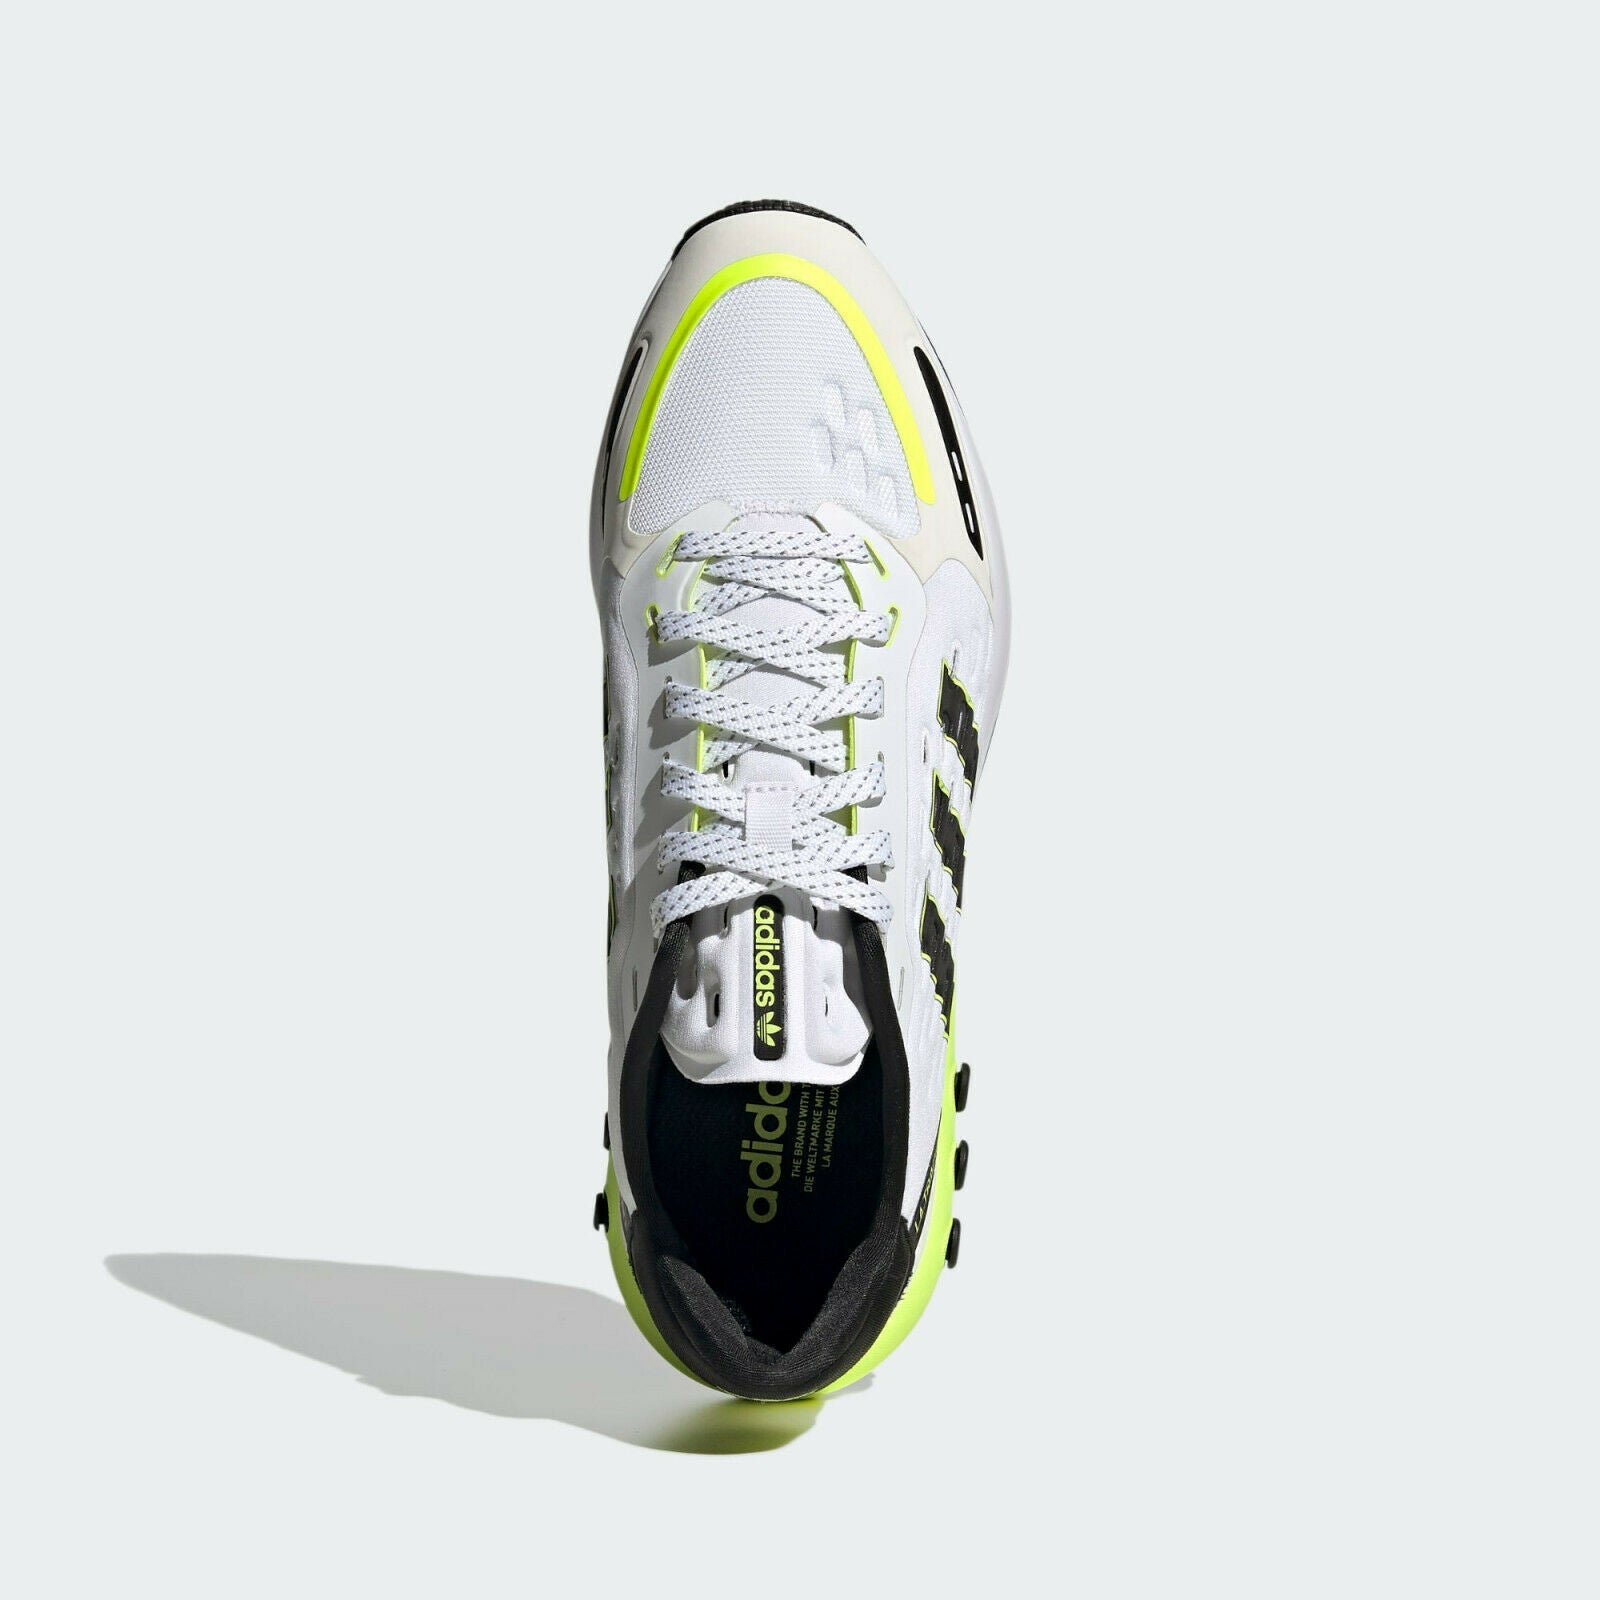 tradesports.co.uk Adidas Men's LA Trainer III Shoes FY3704 White